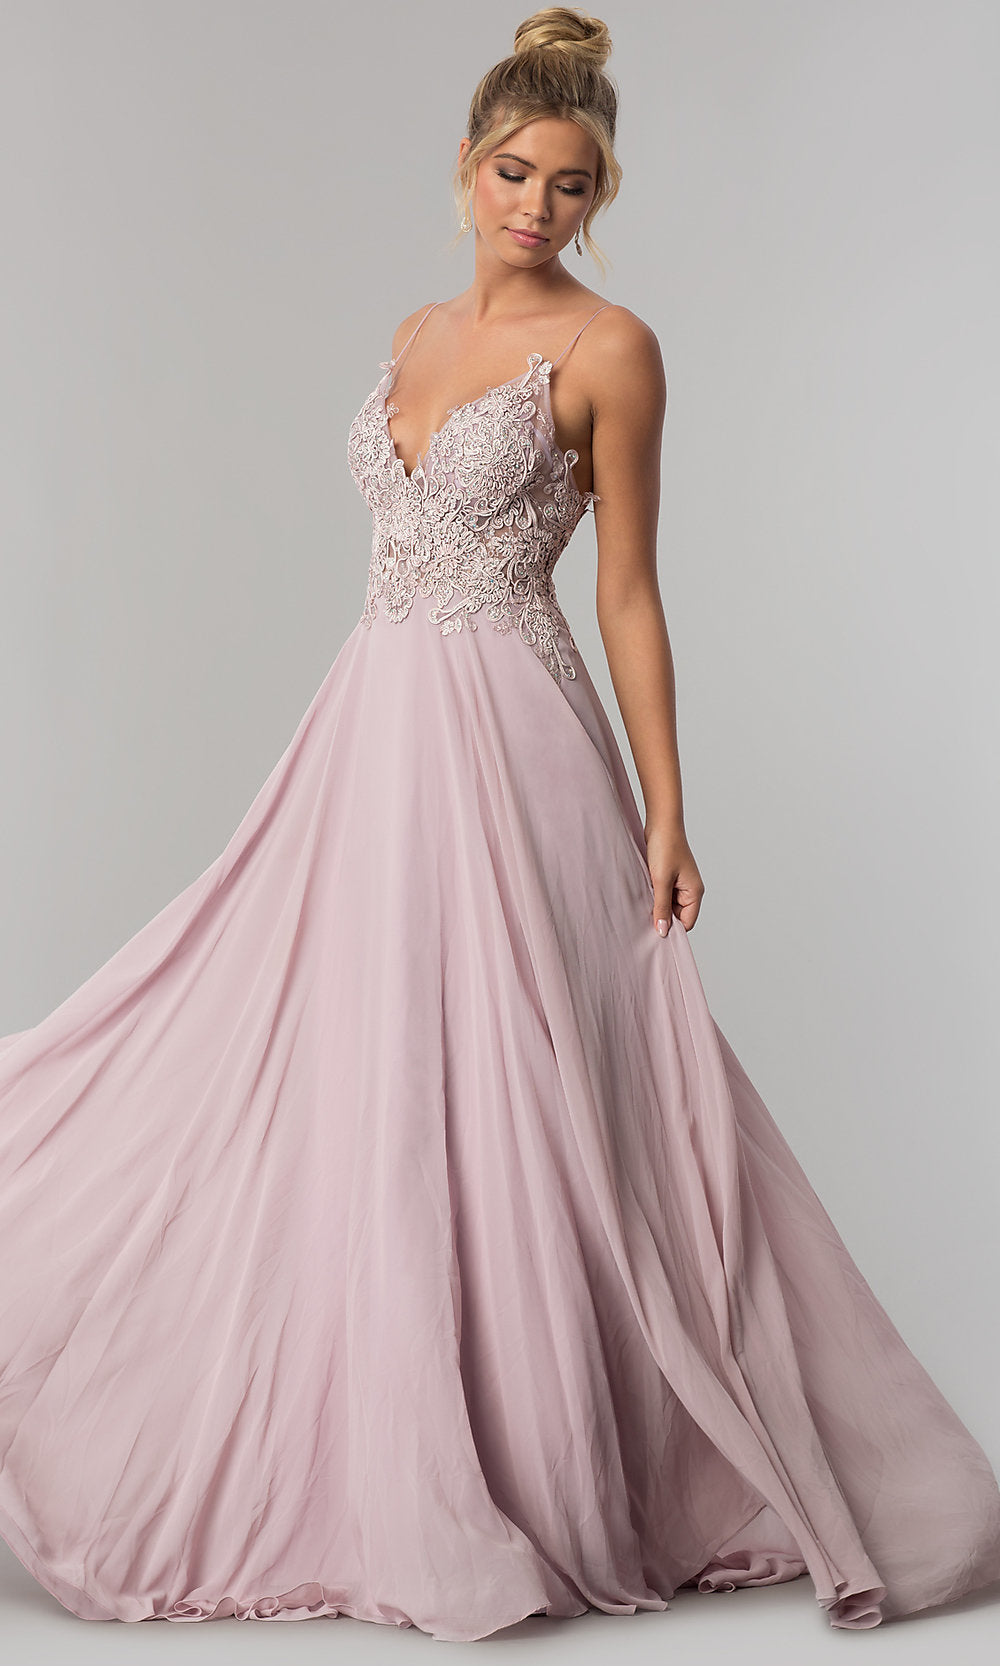 Illusion Chiffon Long Prom Dress with Embroidery